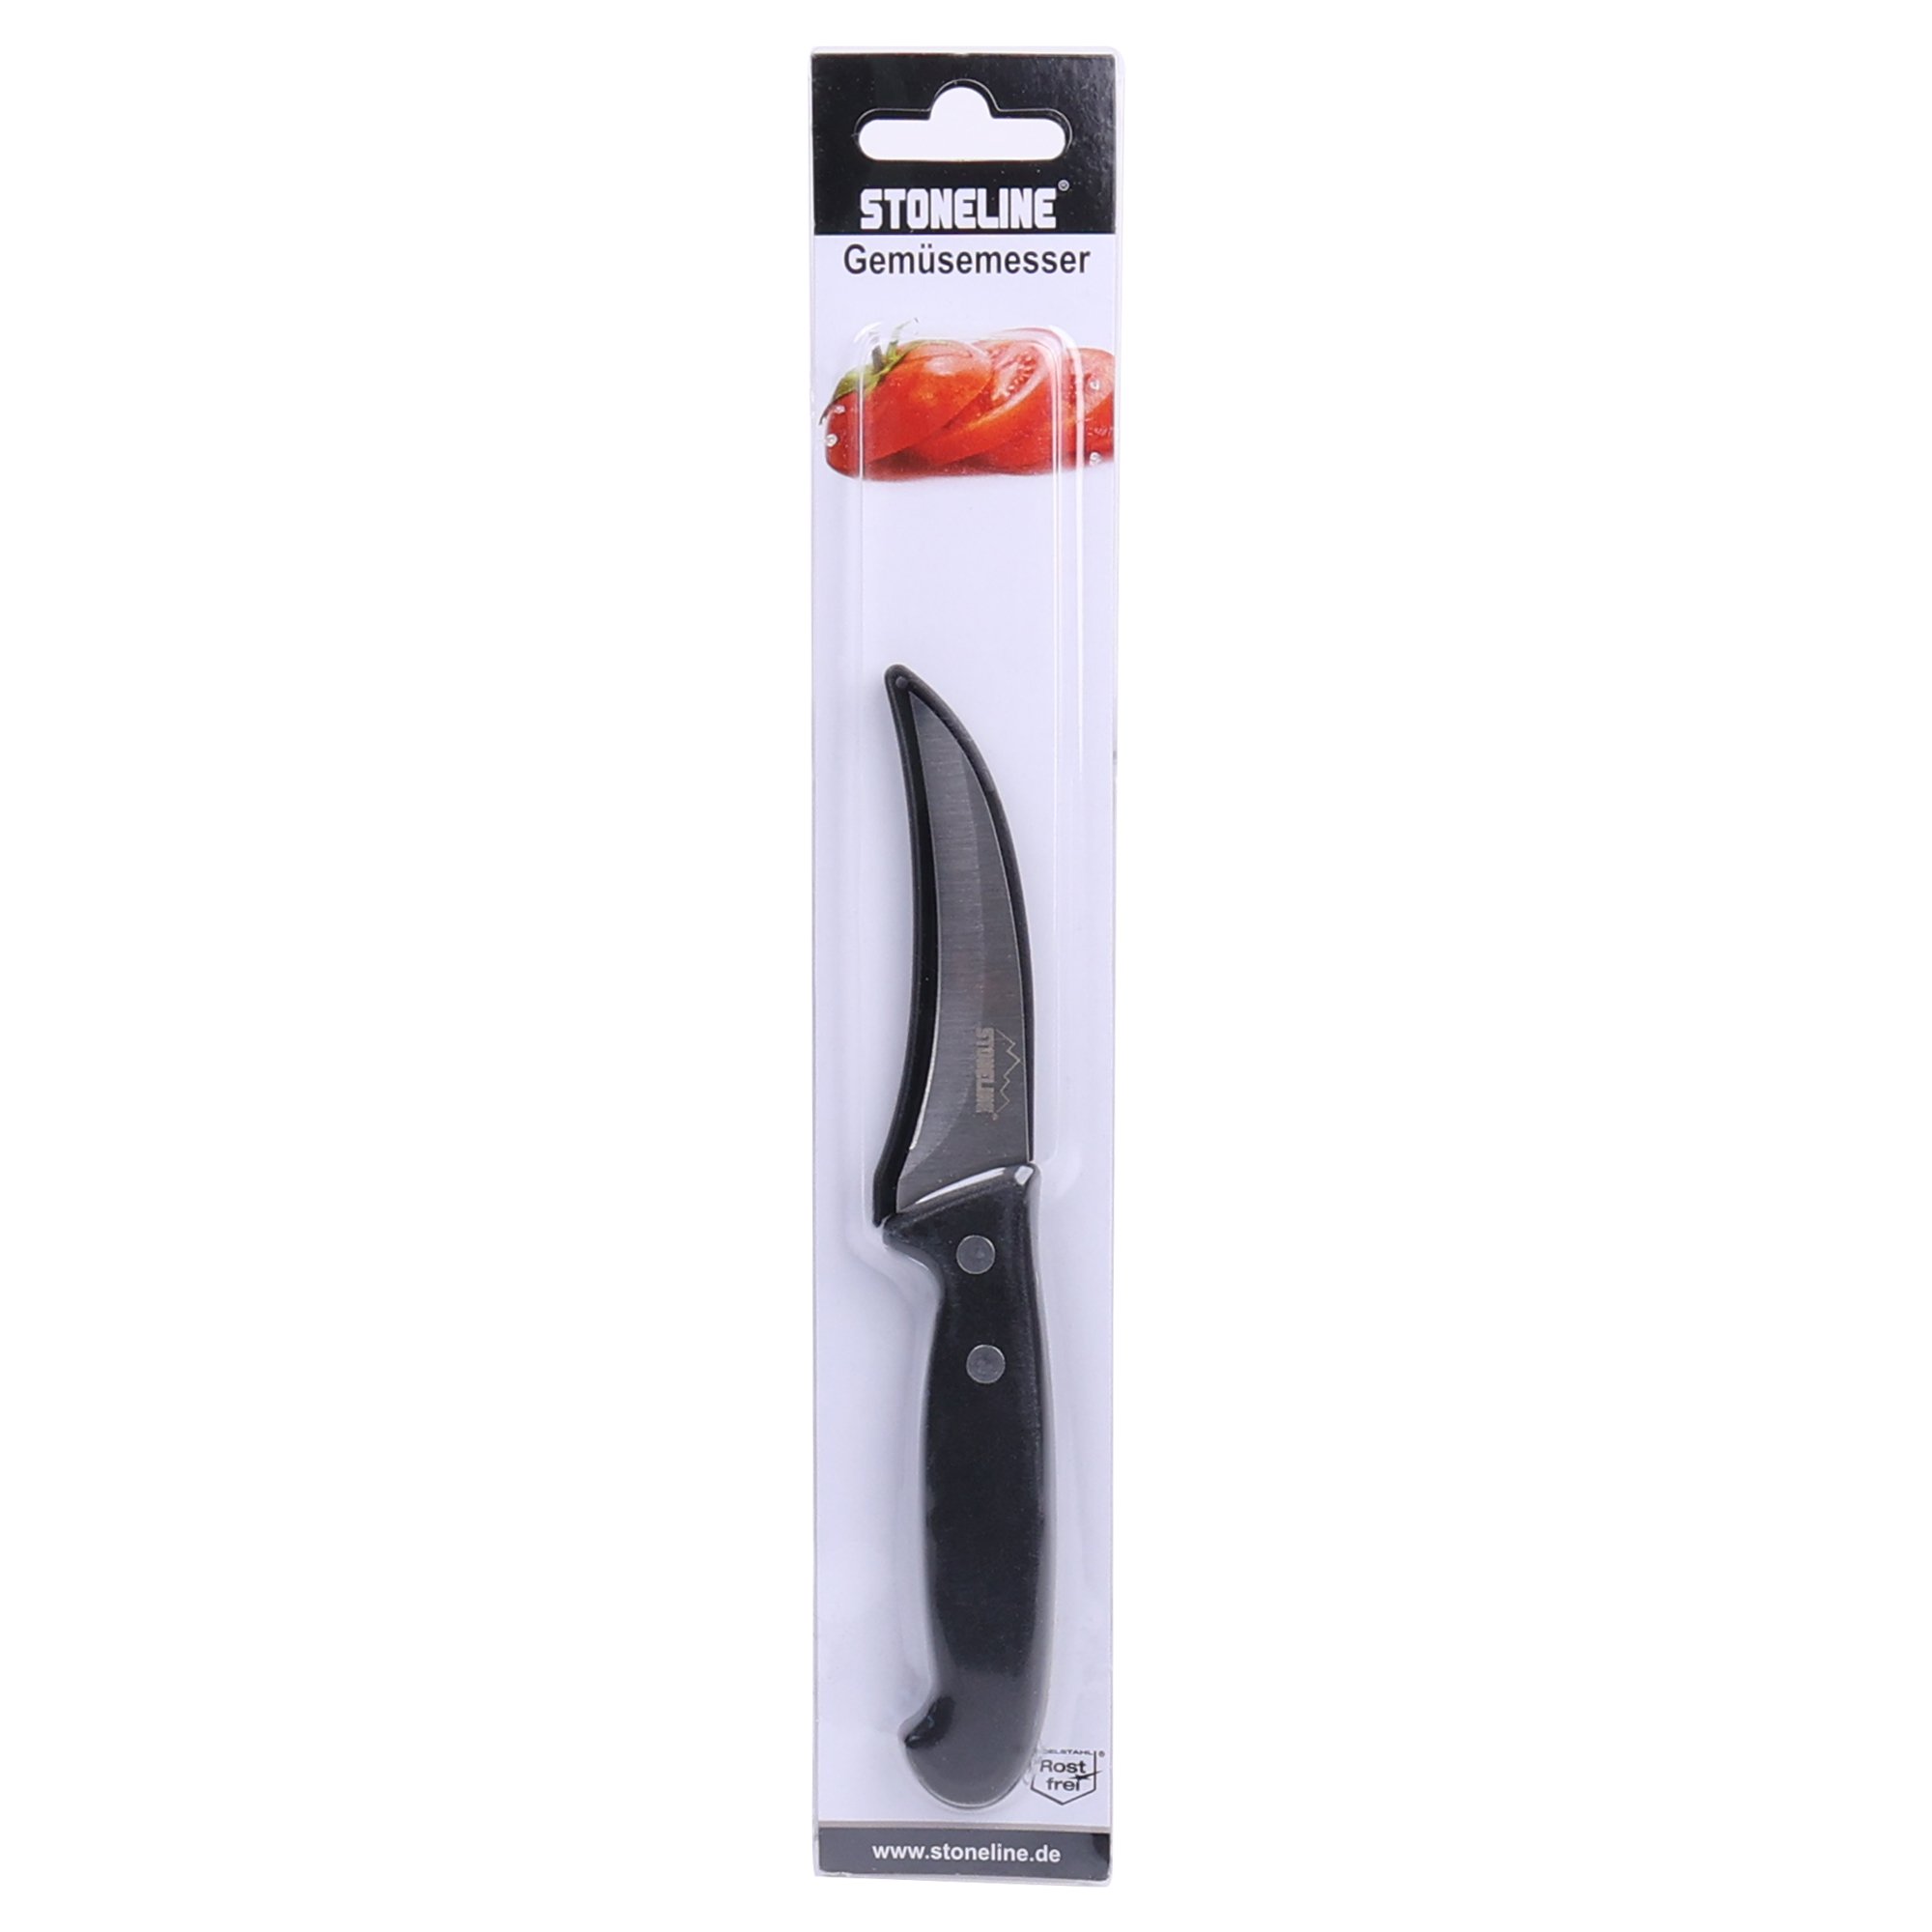 Cuchillo para verduras STONELINE® 18,8 cm, con protector de hoja